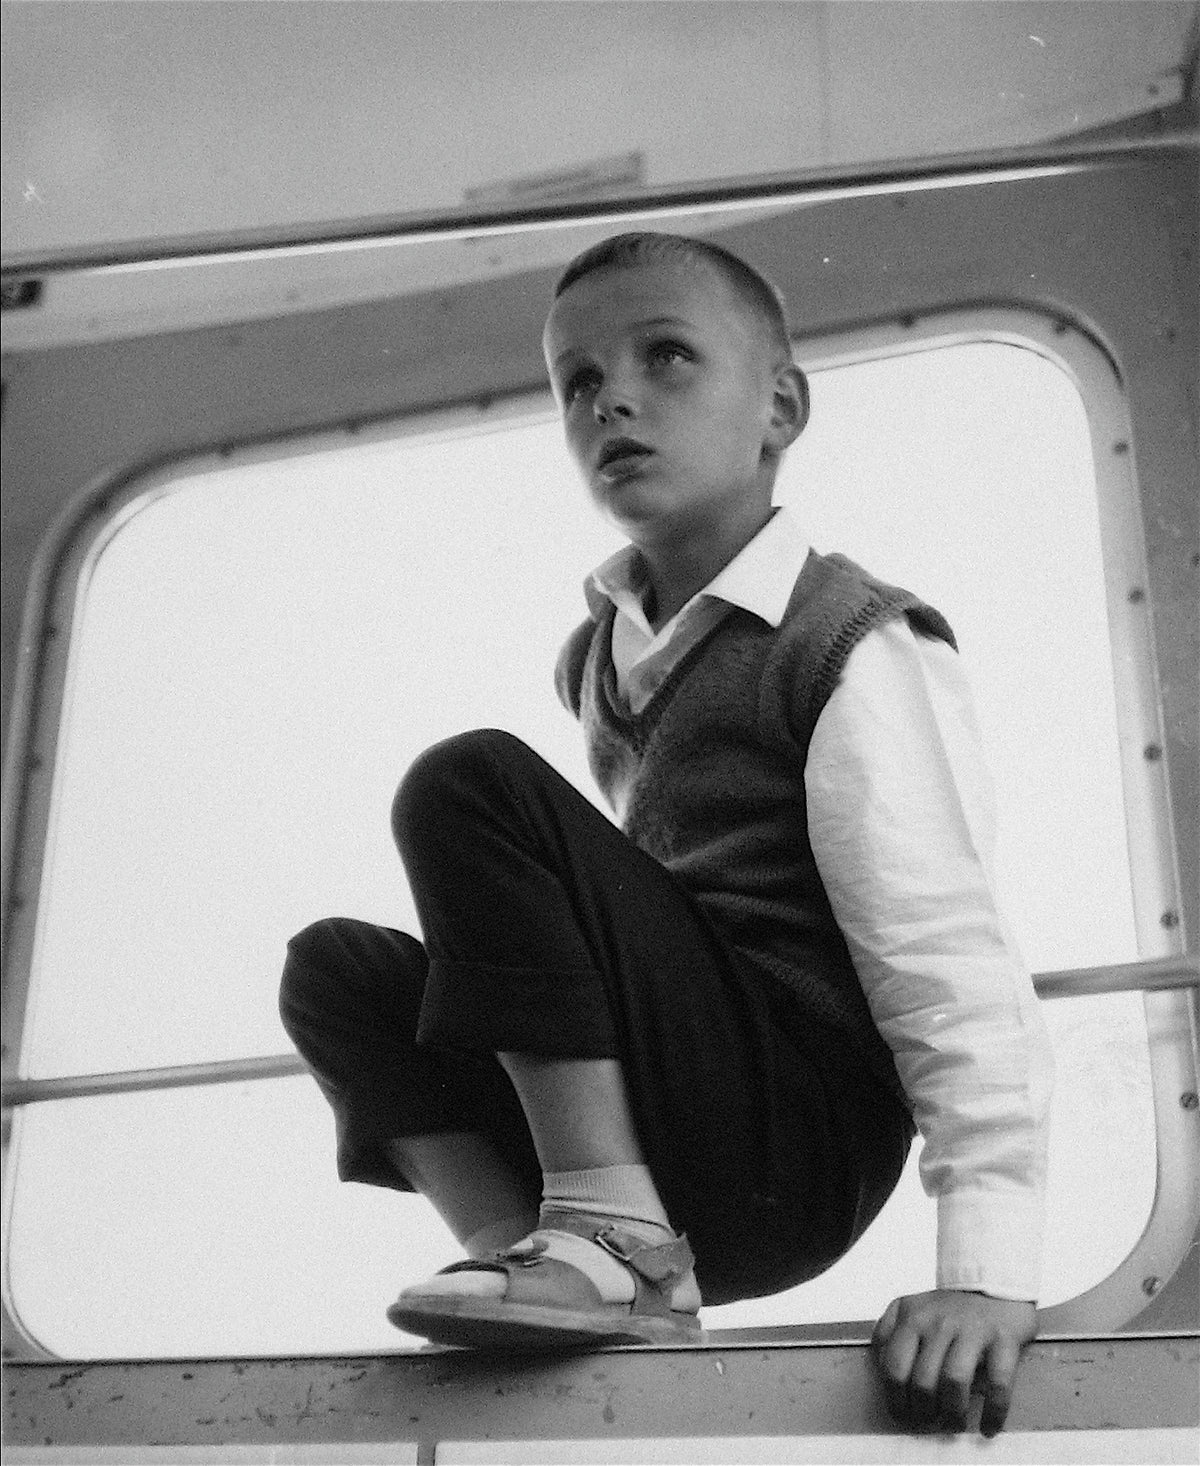 Boy in a Window &lt;br&gt;1960s Photograph &lt;br&gt;&lt;br&gt;#12152